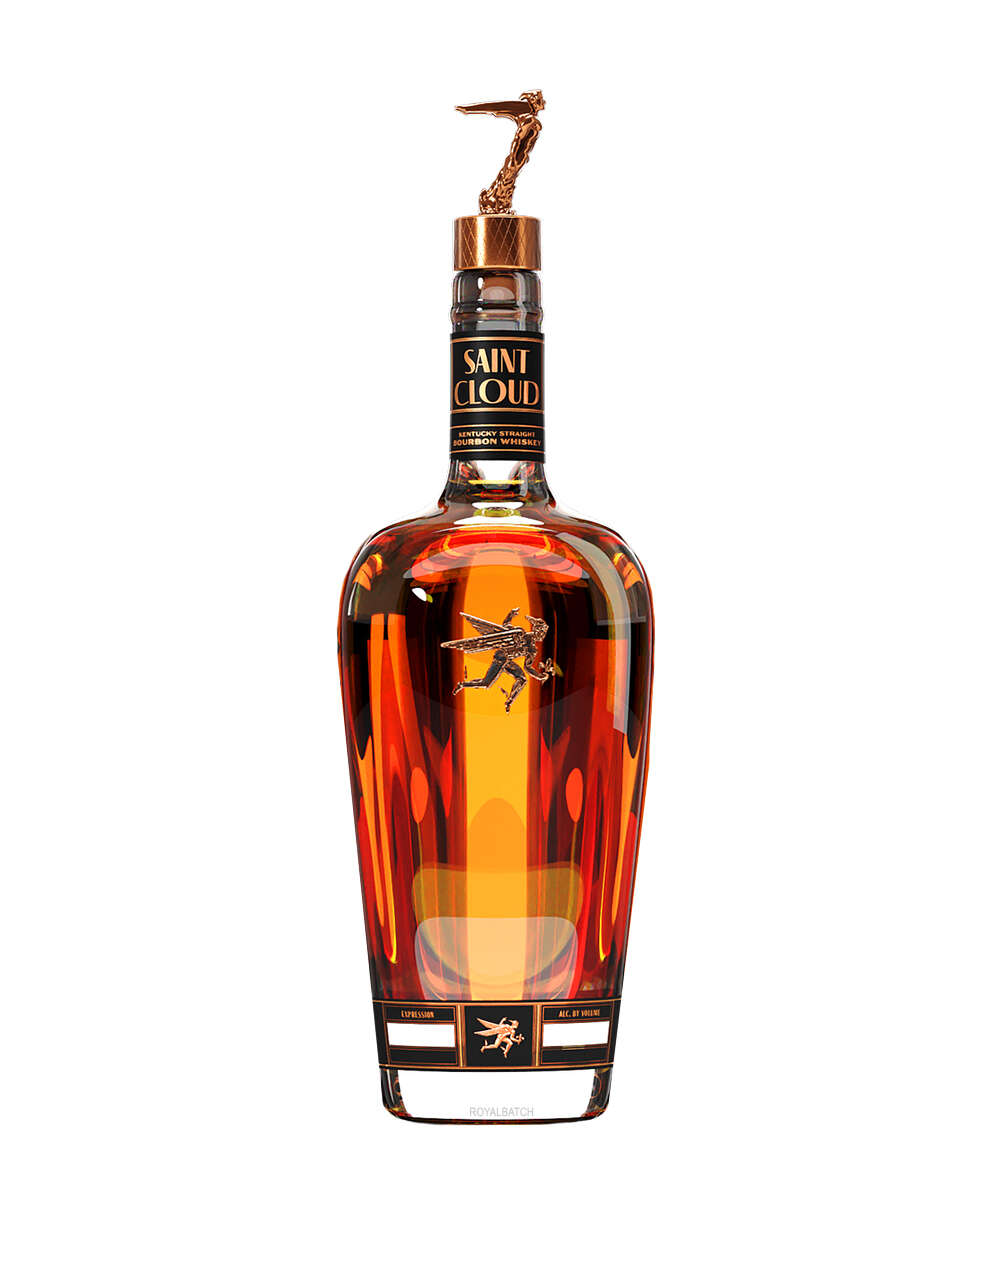 Saint Cloud Small Batch Kentucky Straight Bourbon Whiskey